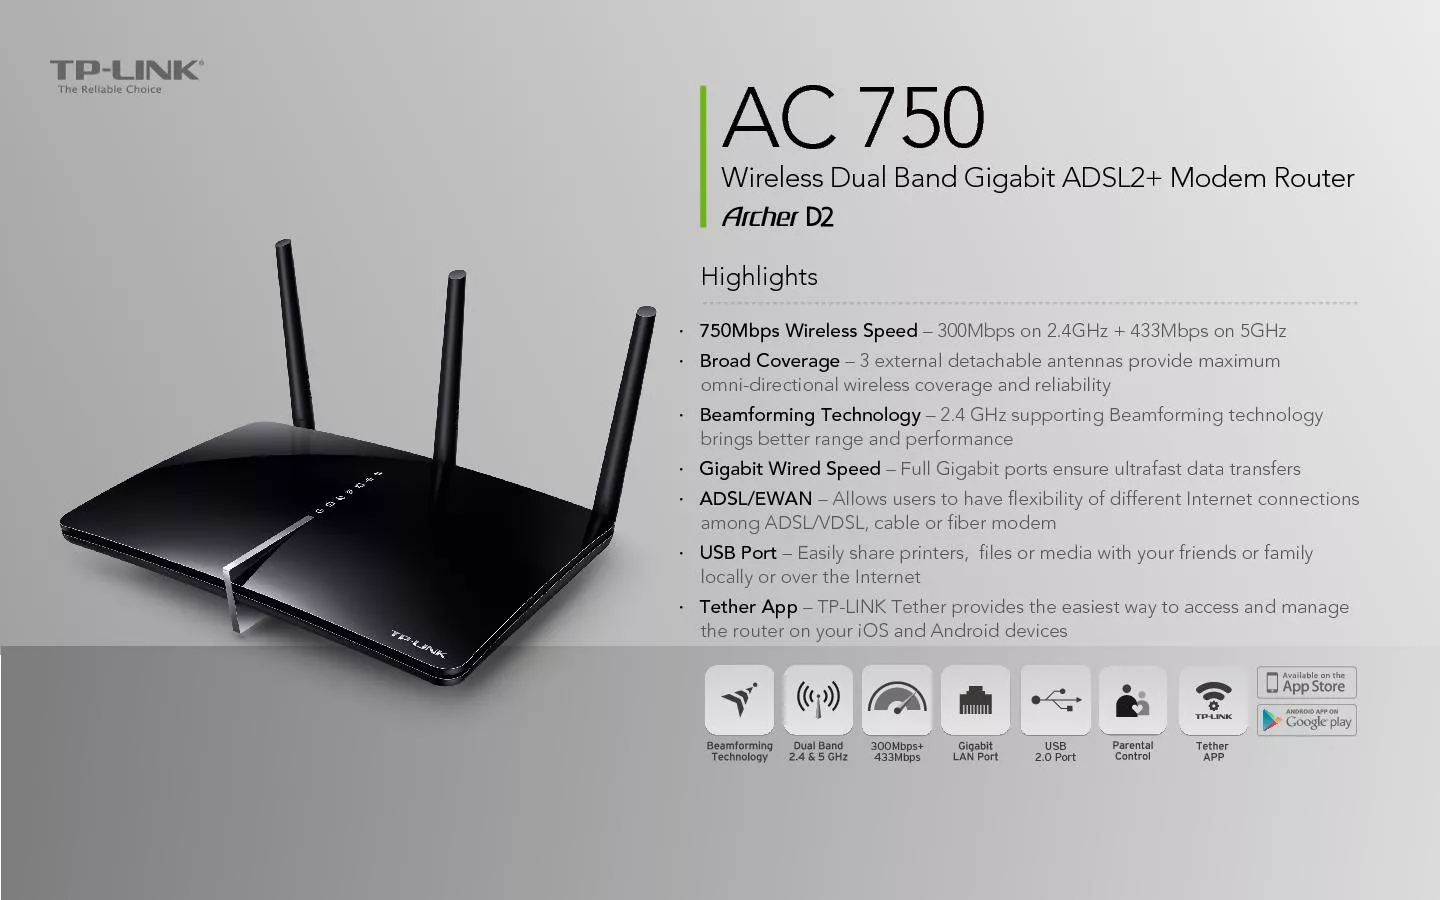 Wireless Dual Band Gigabit ADSL2+ Modem Router